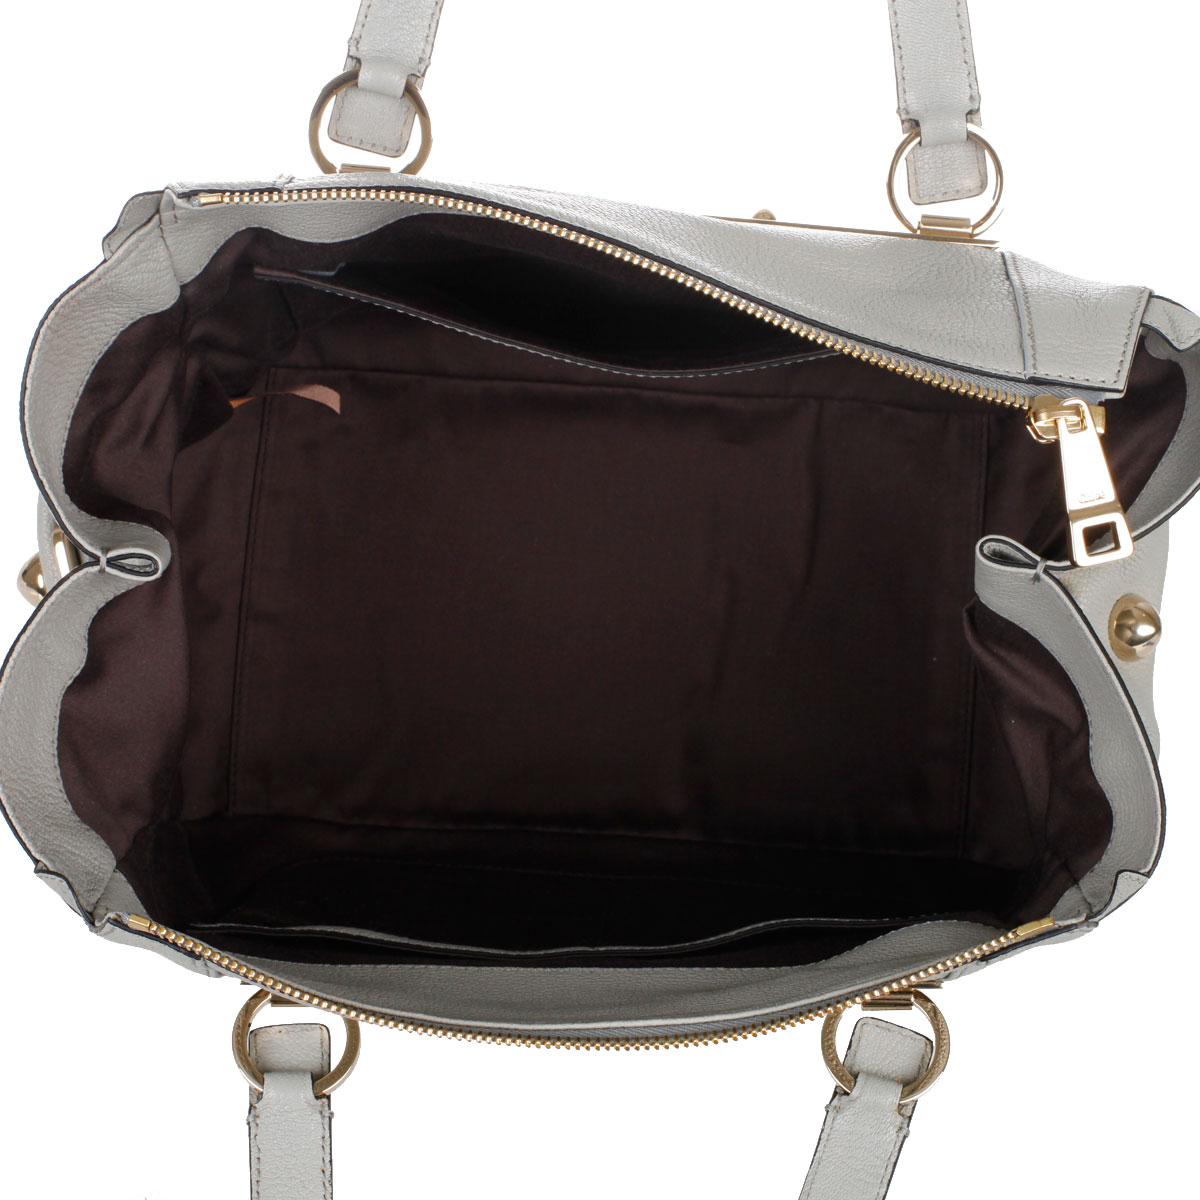 chloe bags online - Chloe Women MARSHMALLOW GREY Leather Handbag - Spence Outlet